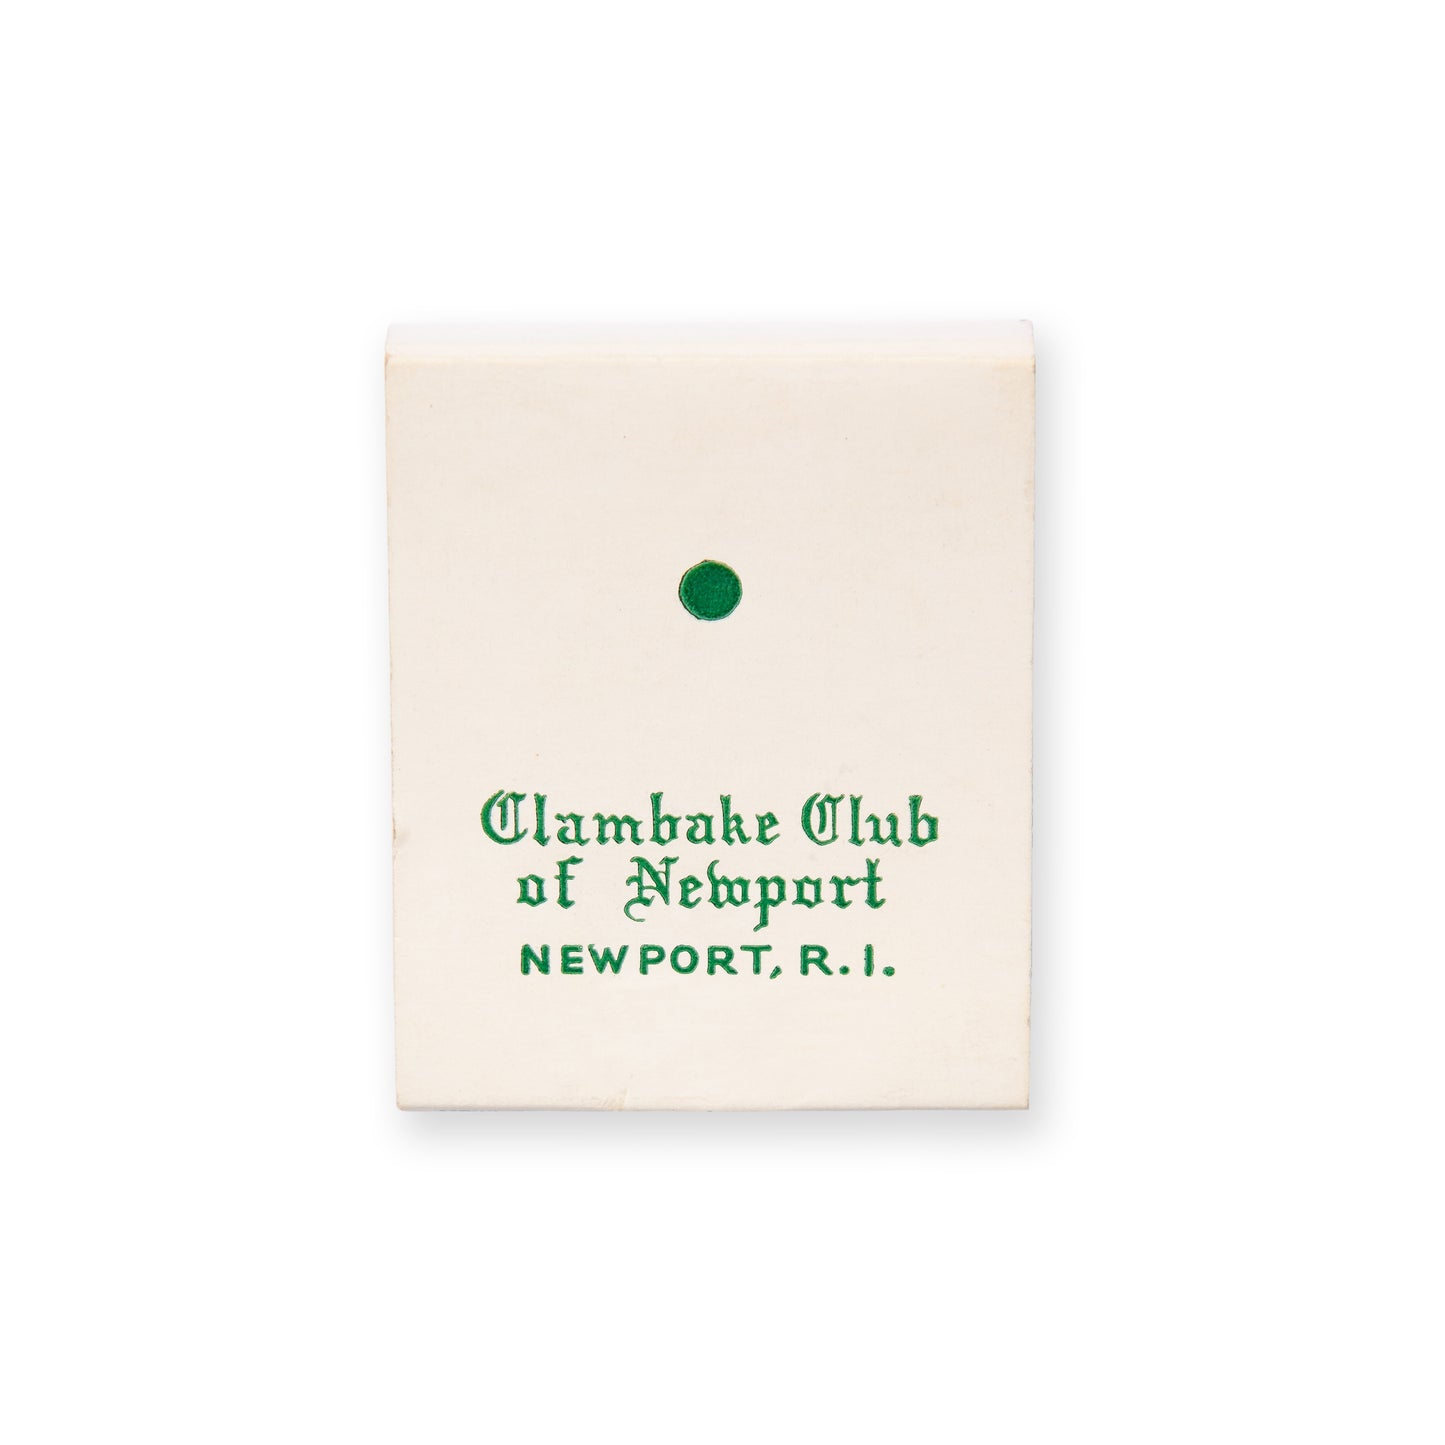 Newport Clambake Club (Front)